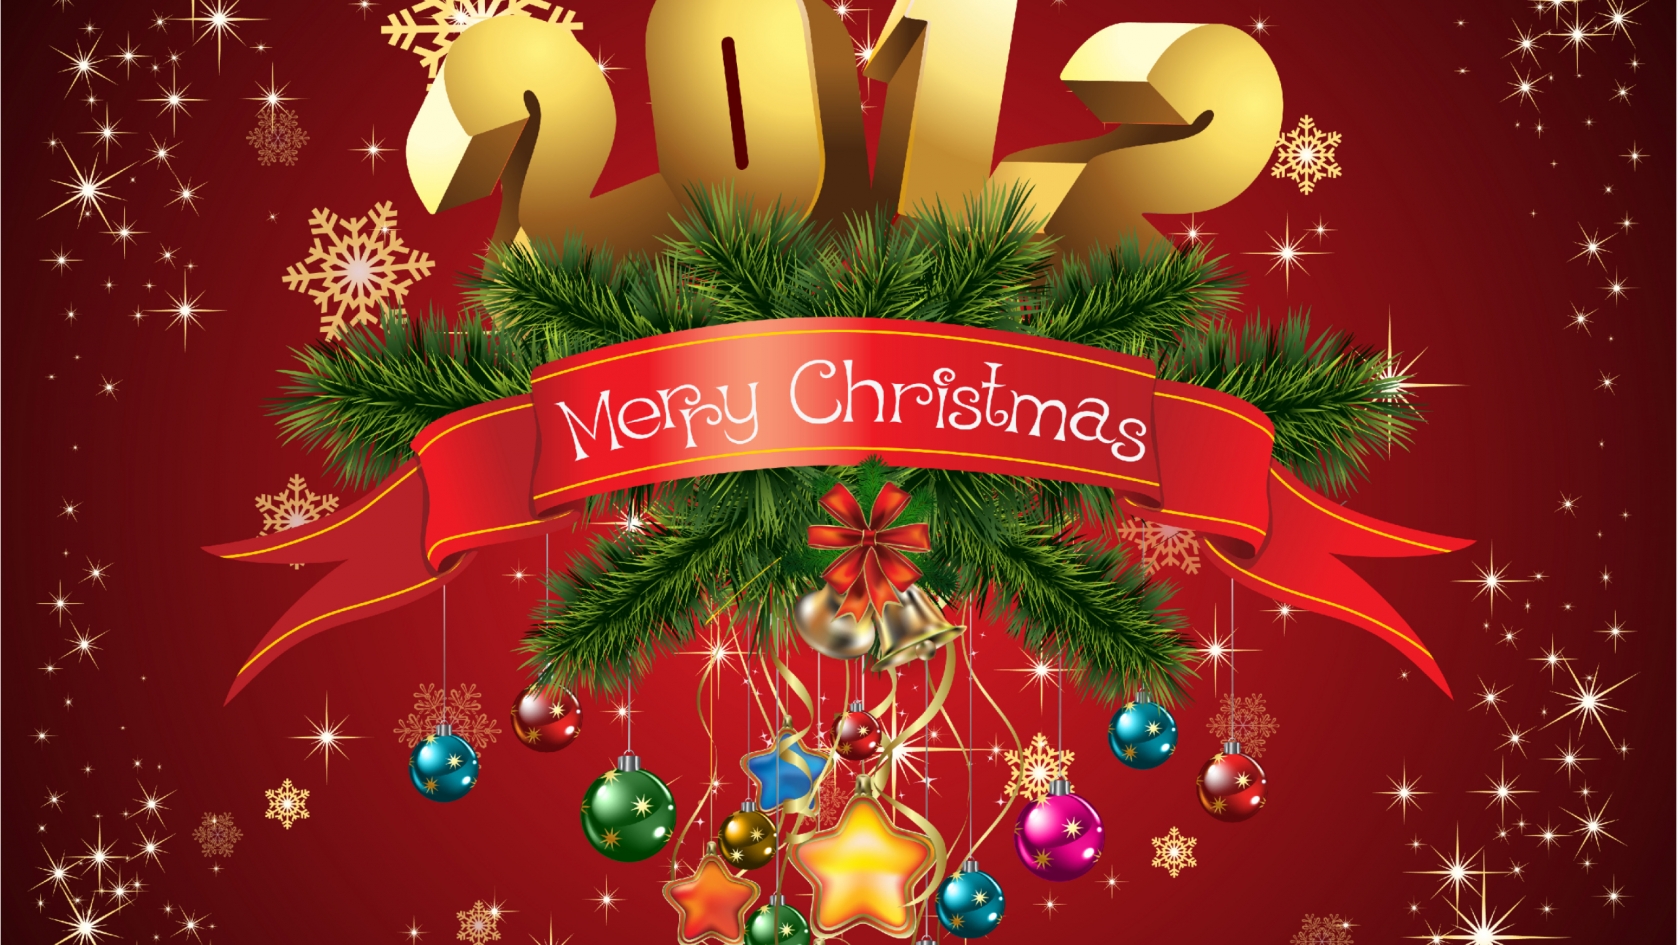 Merry Christmas 2012 for 1680 x 945 HDTV resolution